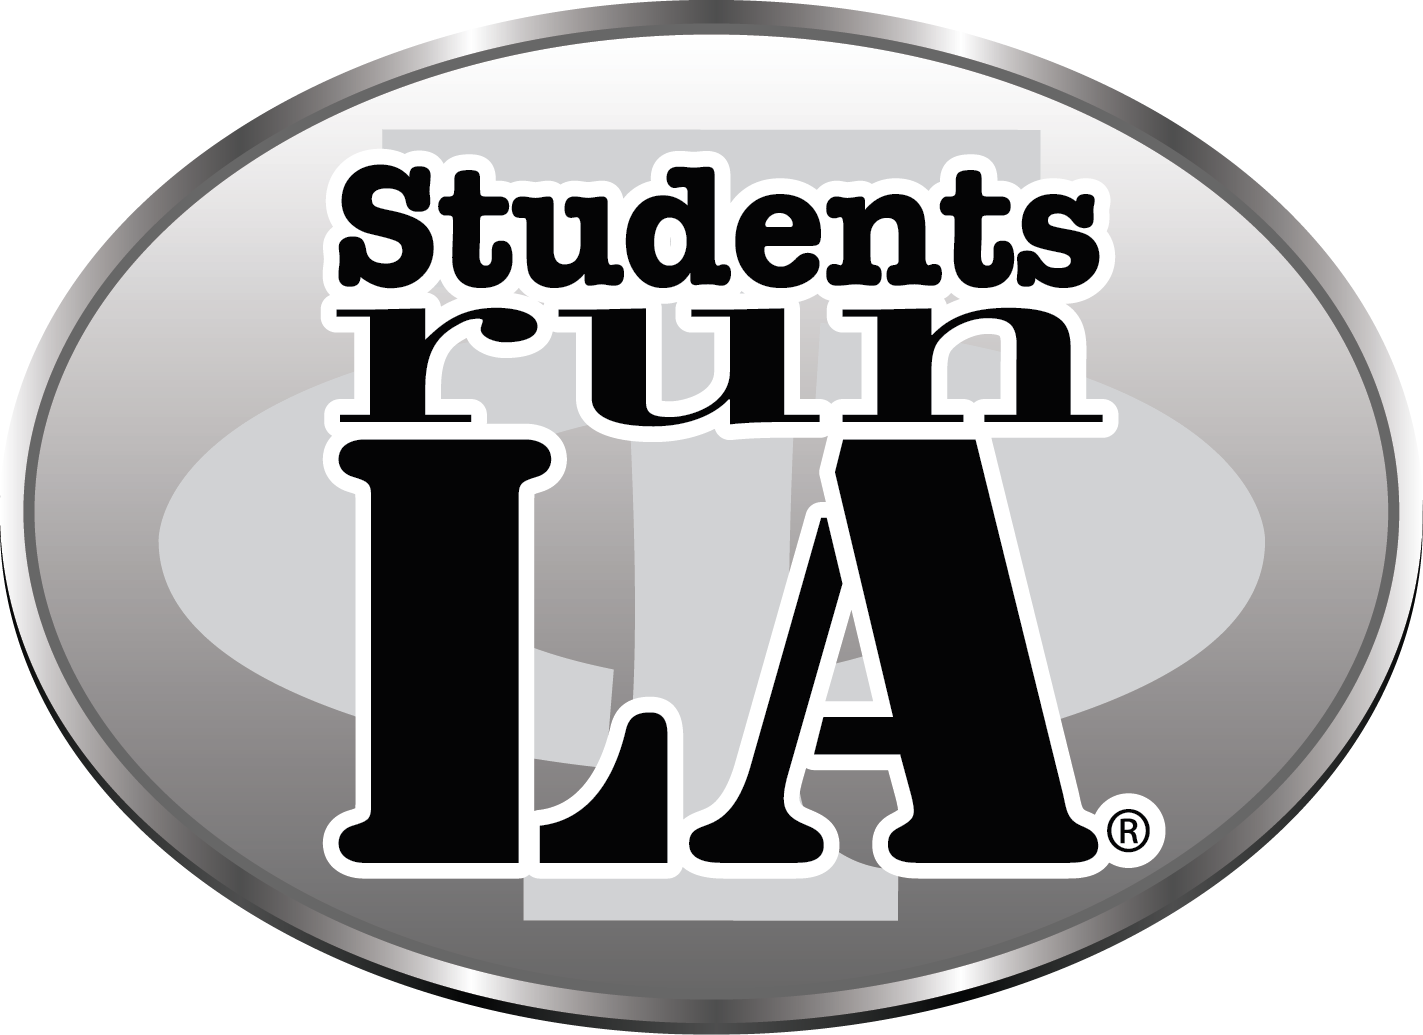 Students Run LA